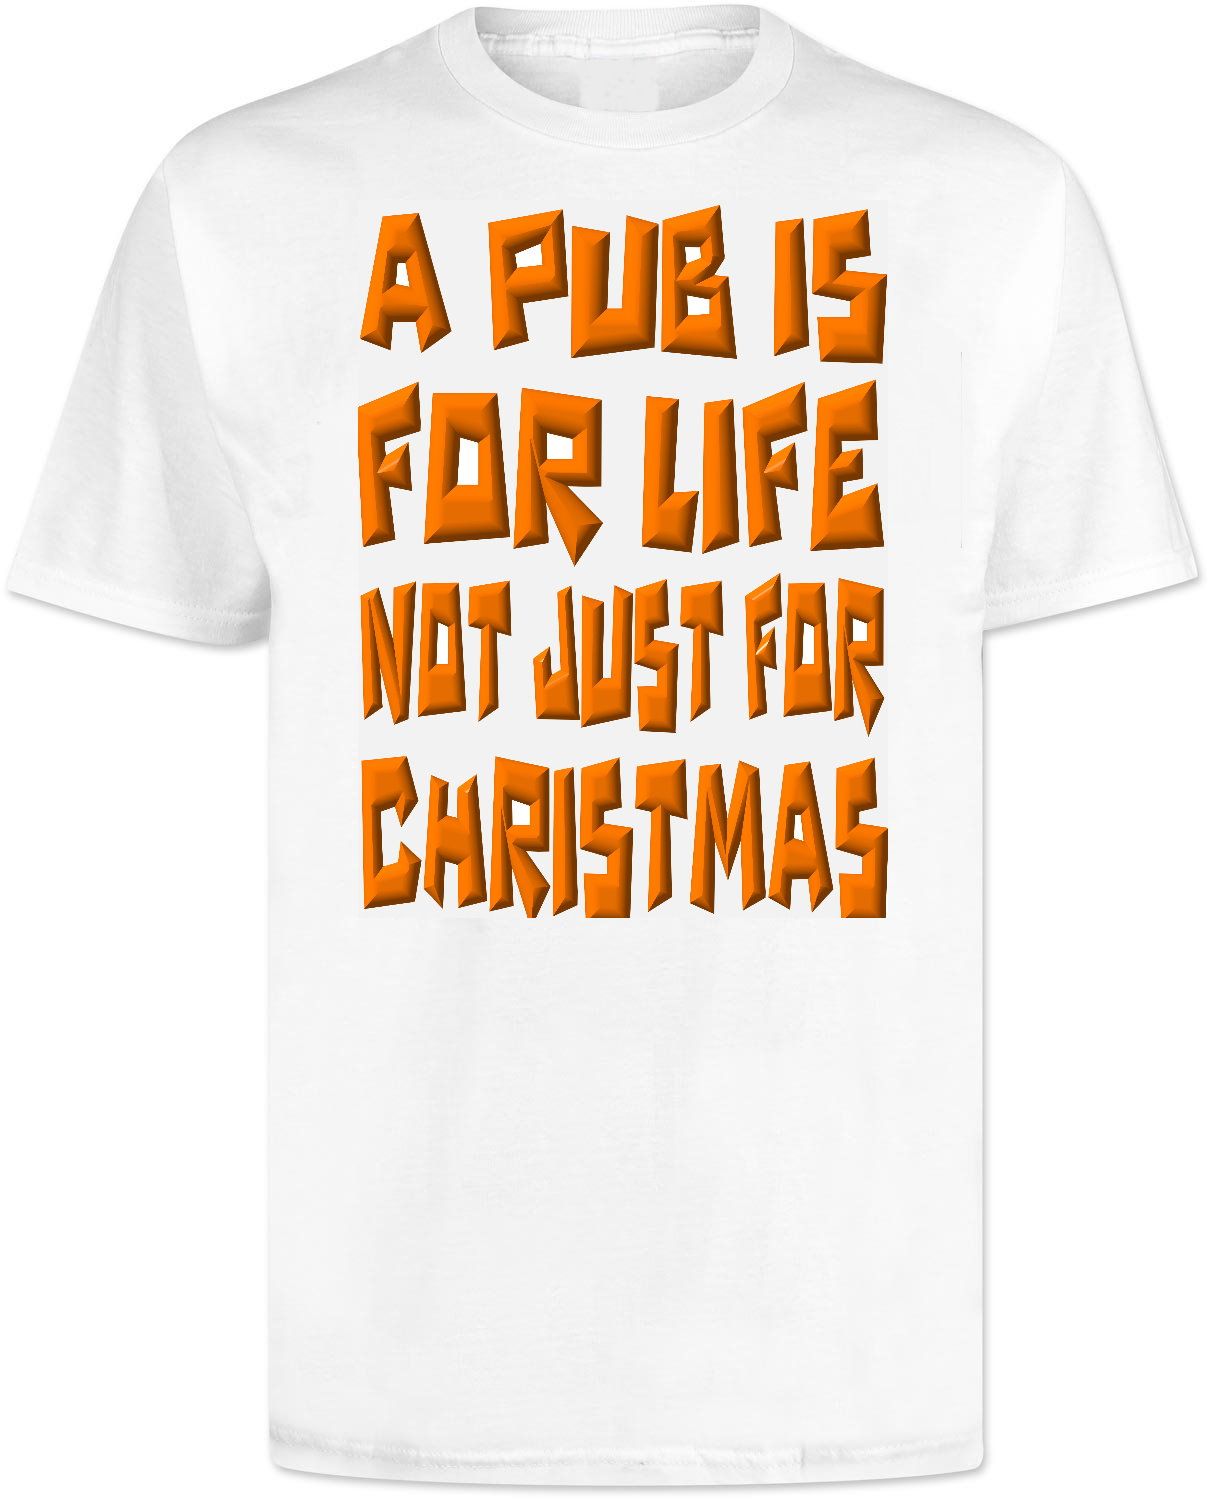 Offensive Rude Crude Funny Joke Birthday Christmas Xmas Ts Tshirt T Shirts Tee Tees T Shirts 1006